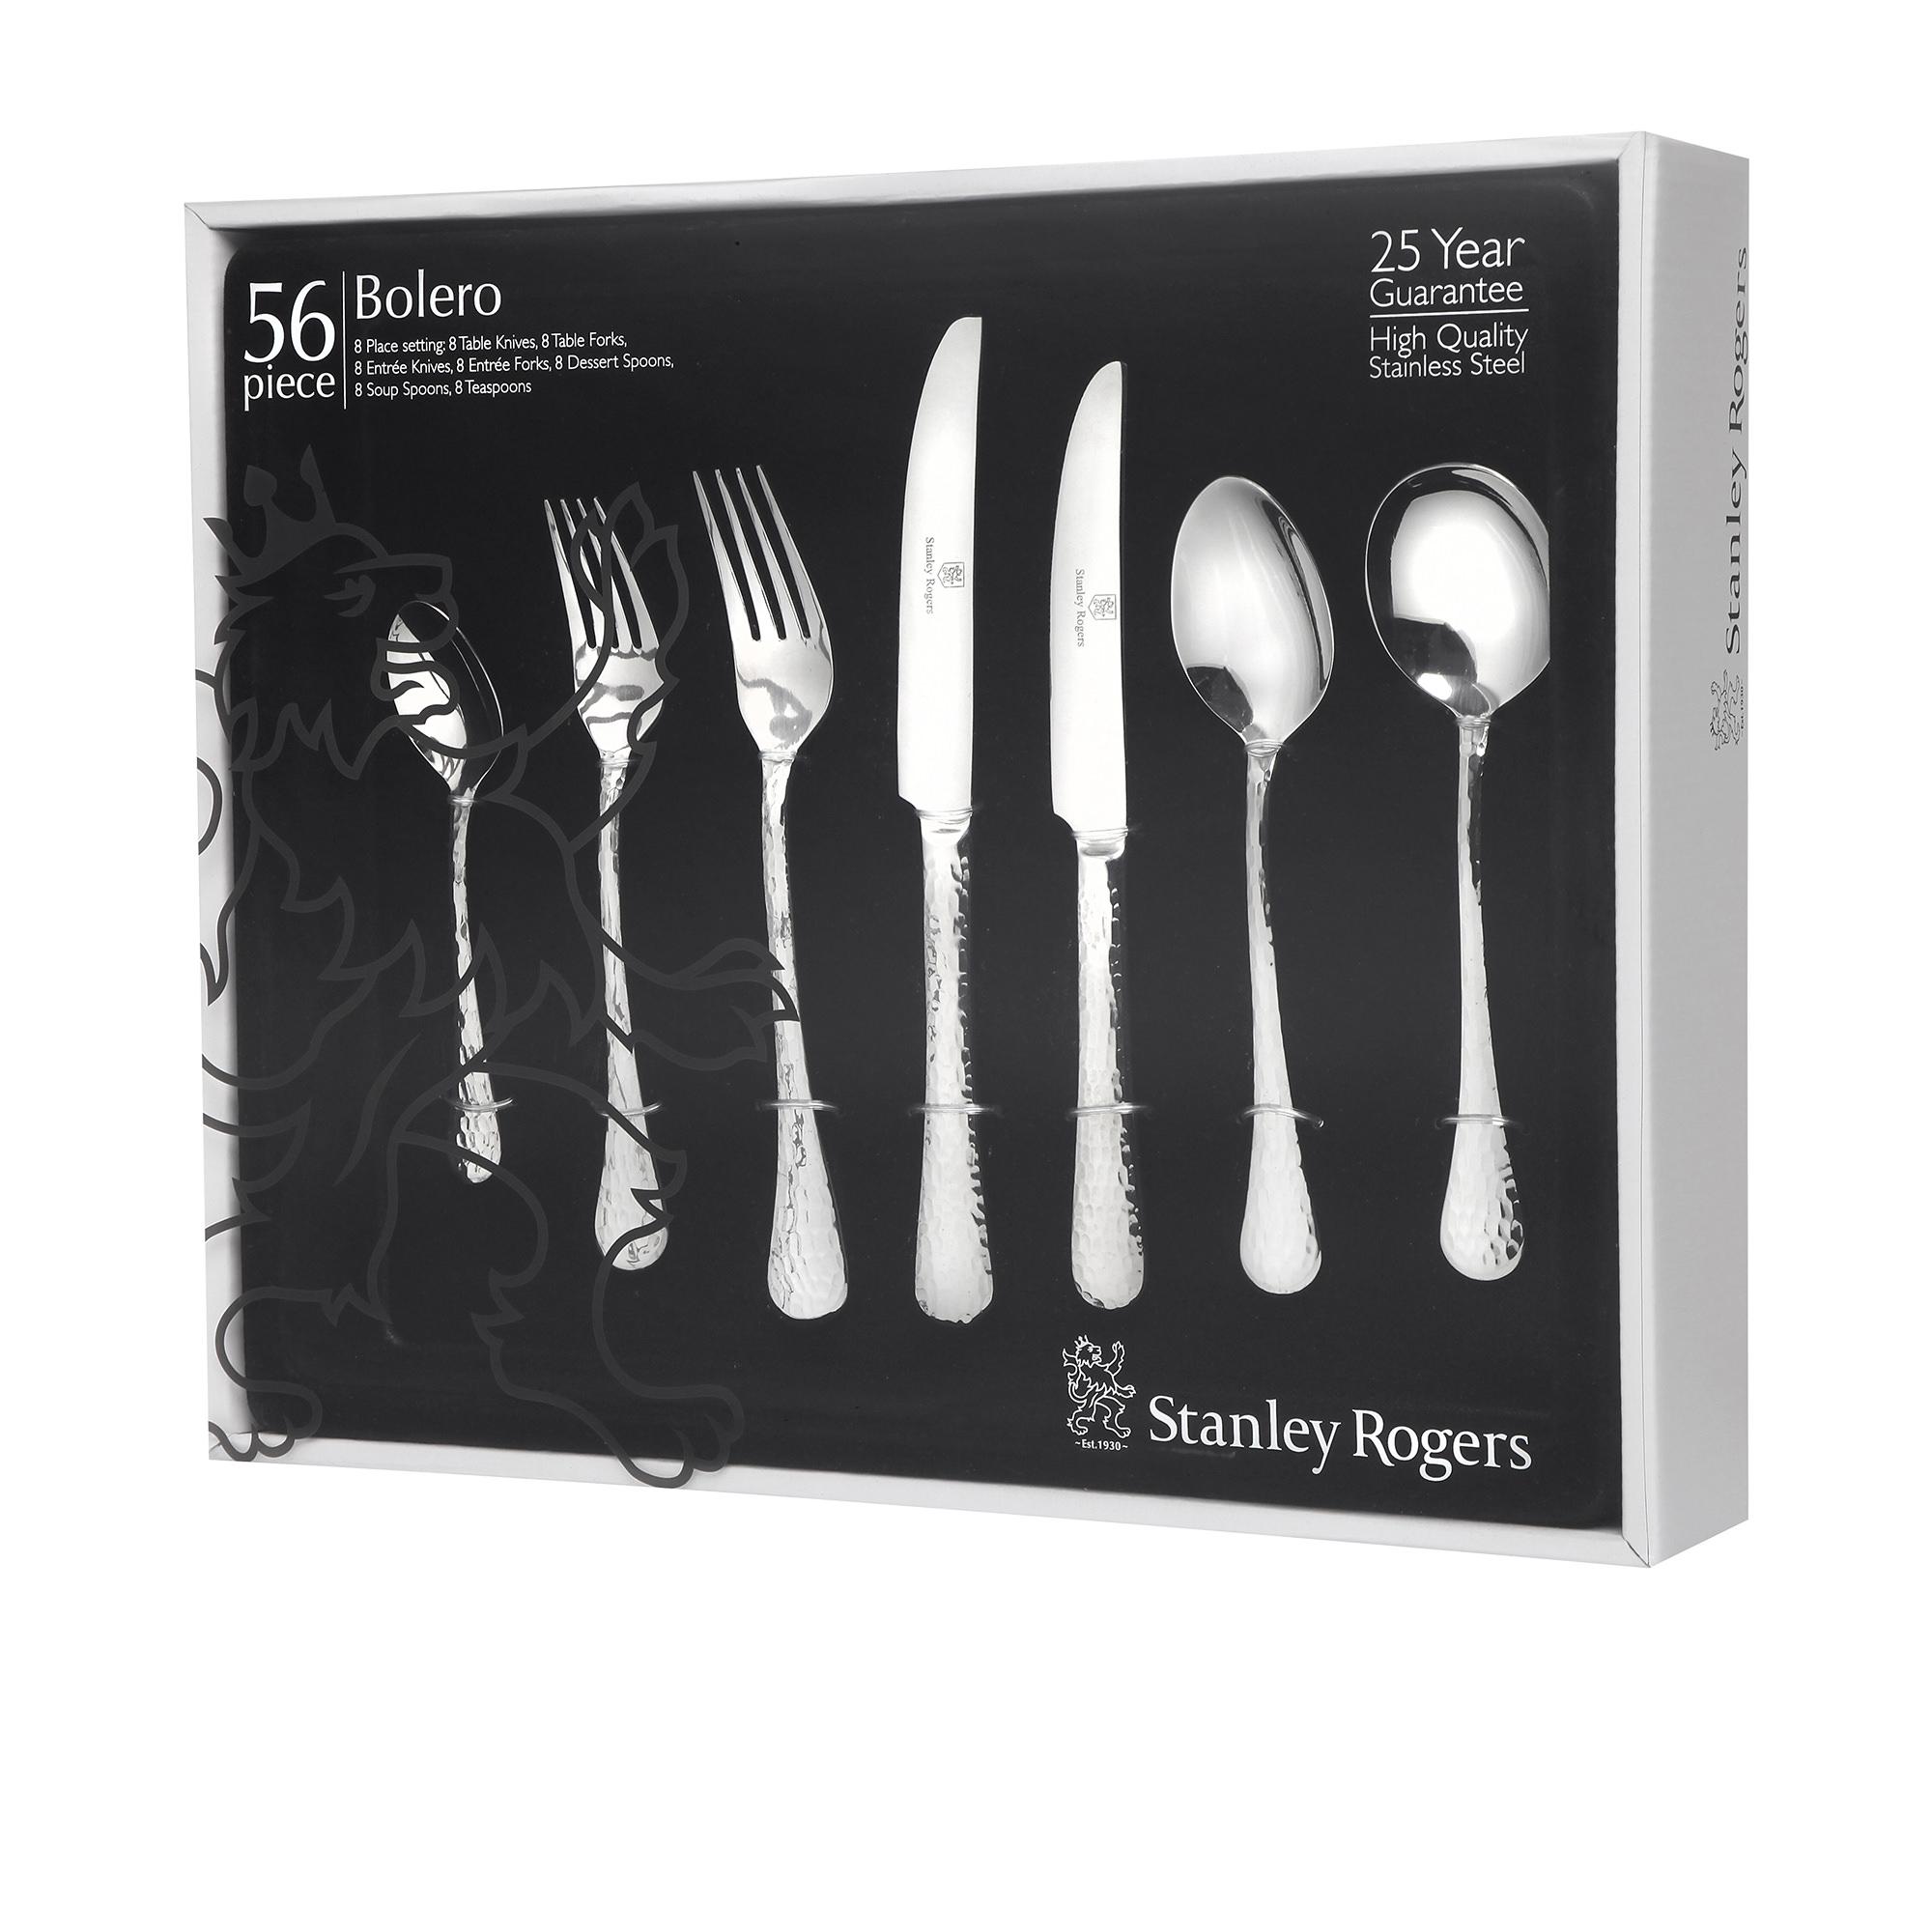 Stanley Rogers Bolero Cutlery Set 56pc Image 4